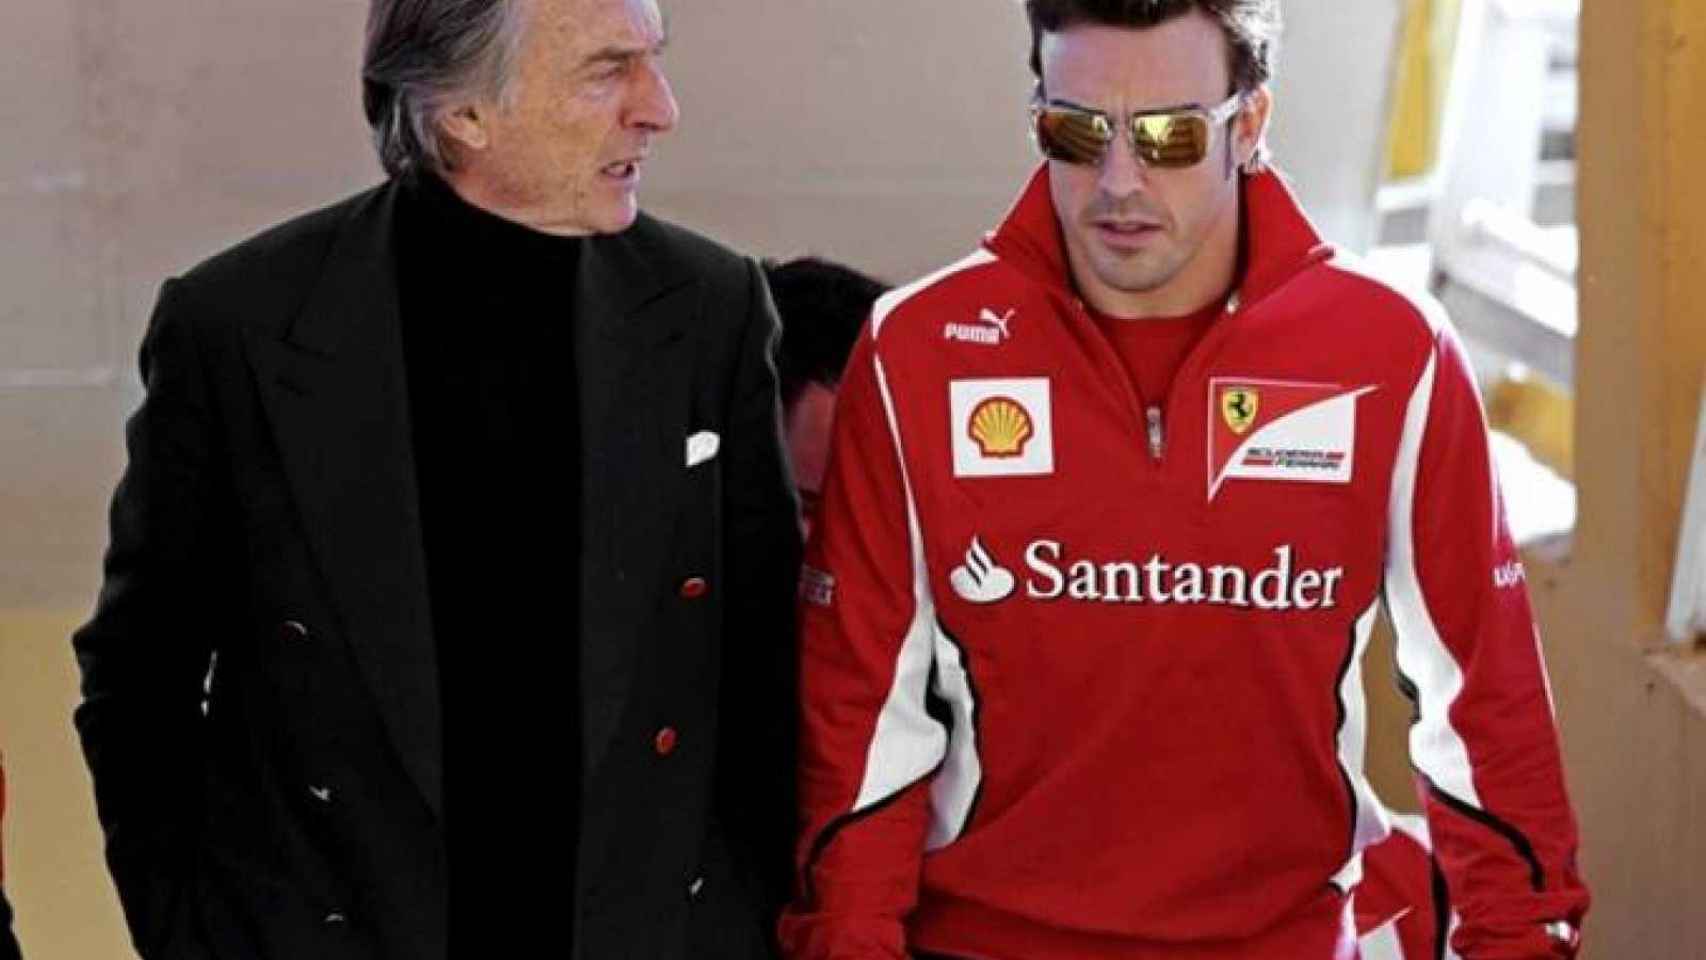 Fernando Alonso y Luca Di Montezemolo durante la etapa de ambos en Ferrari